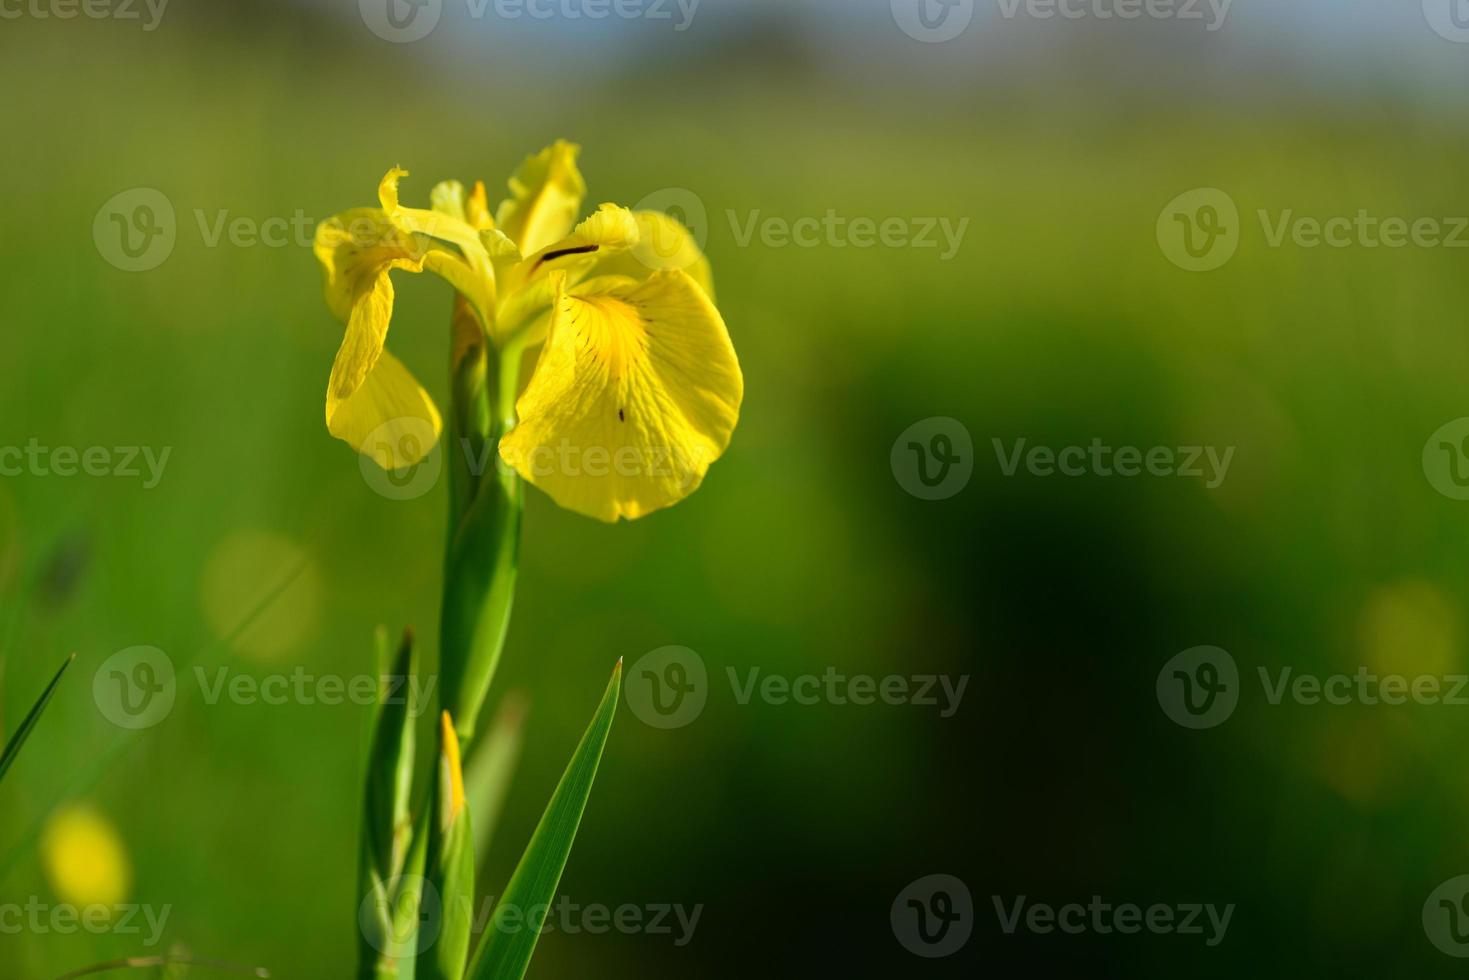 Iris salvaje jersey uk imagen macro de una primavera de flores silvestres  de pantano 2826196 Foto de stock en Vecteezy